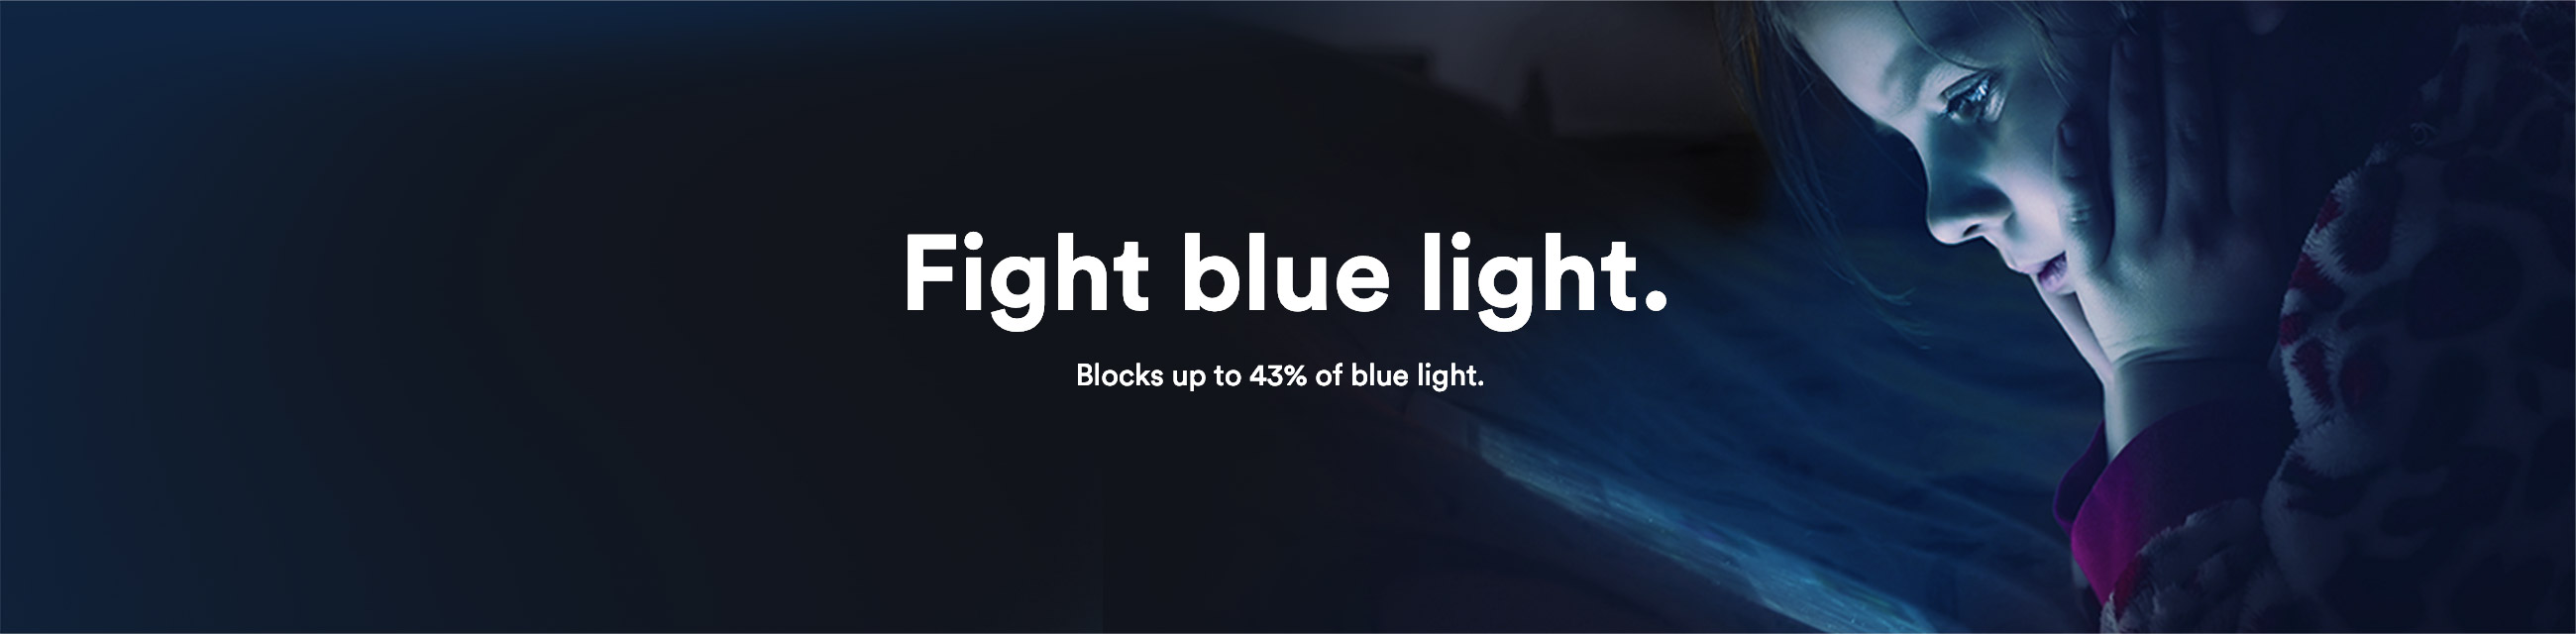 fight phone blue light